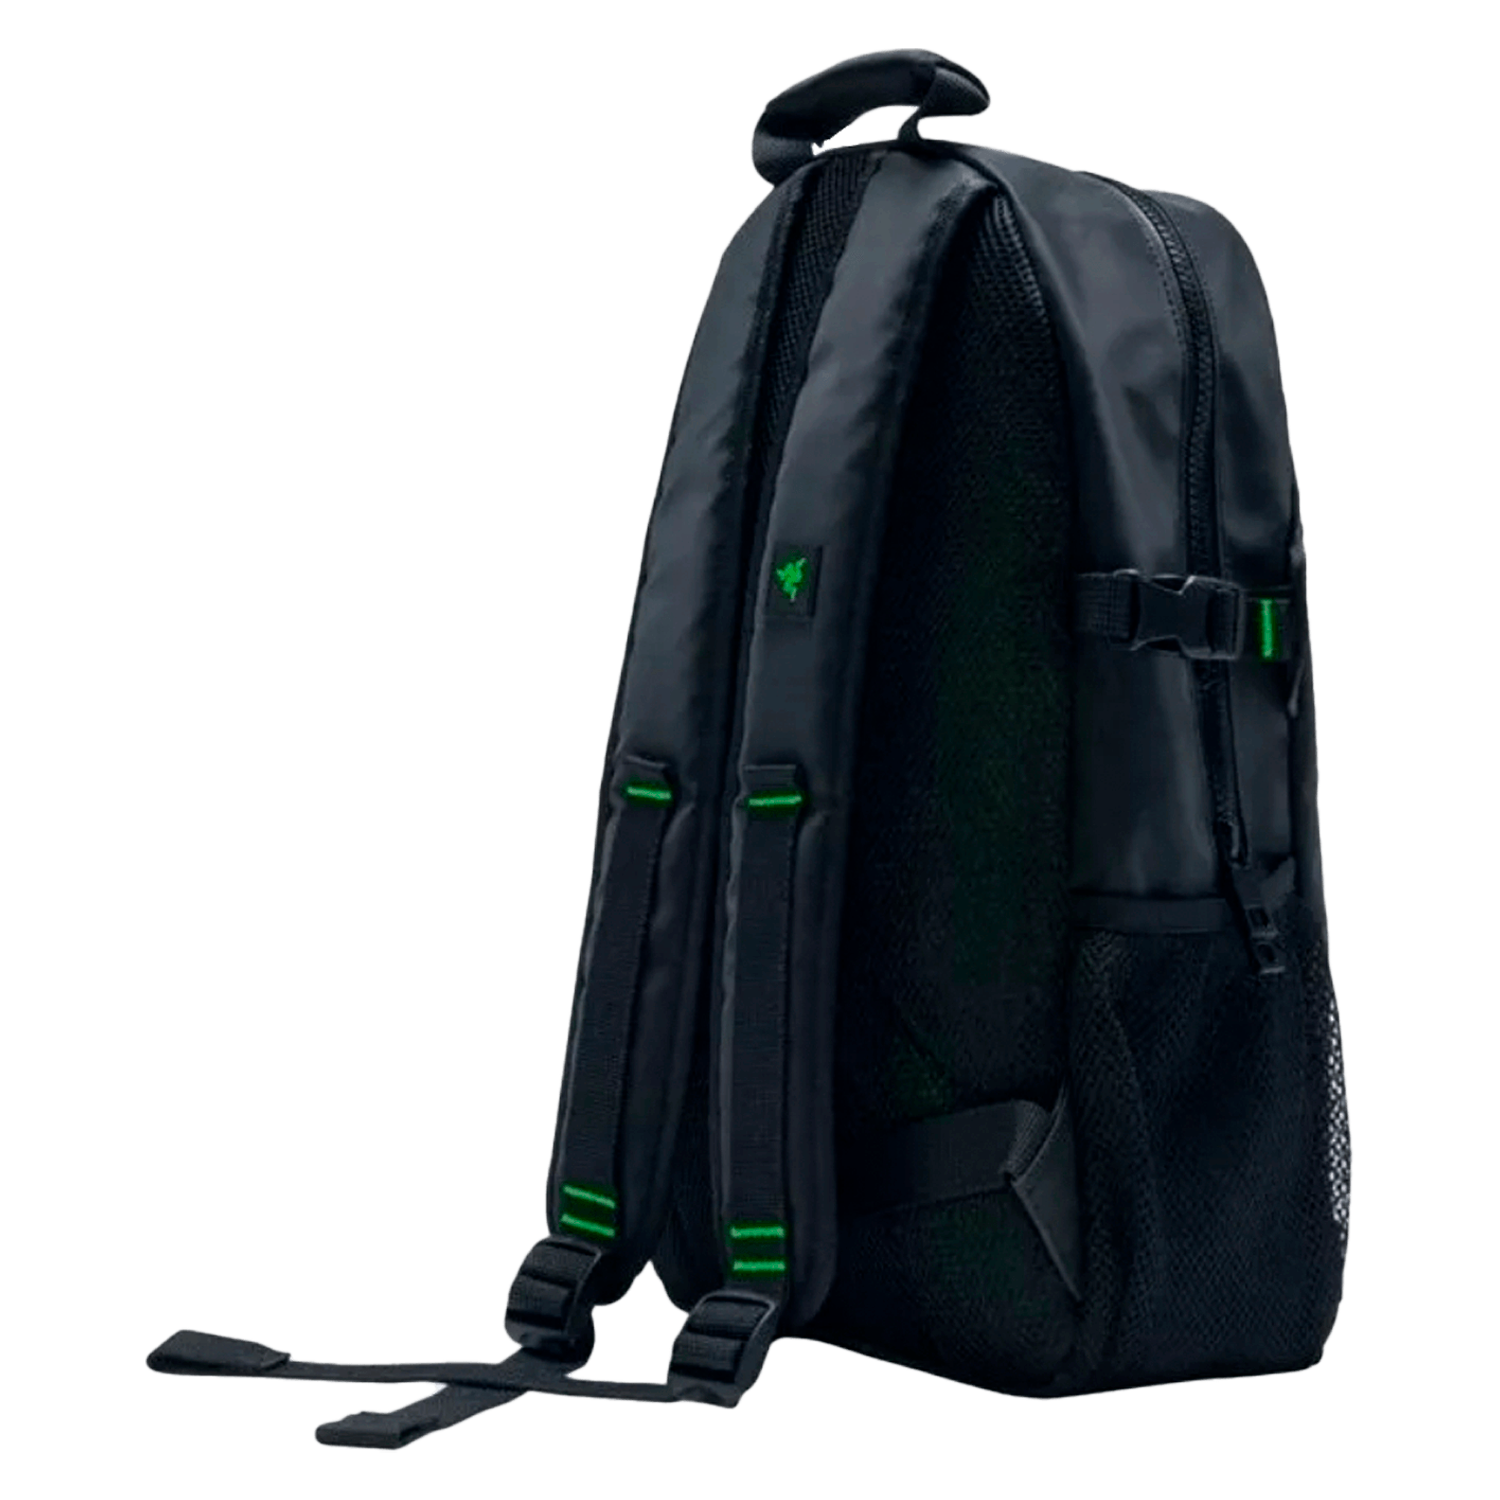 Mochila Razer Rogue Backpack 13.3 - Preto (RC81-02640101-0000)